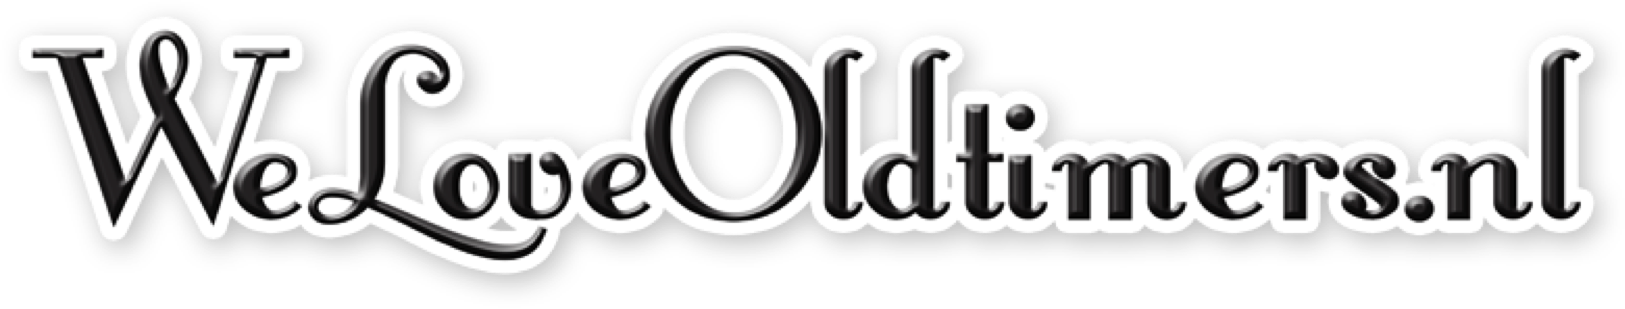 WeLoveOldtimers logo